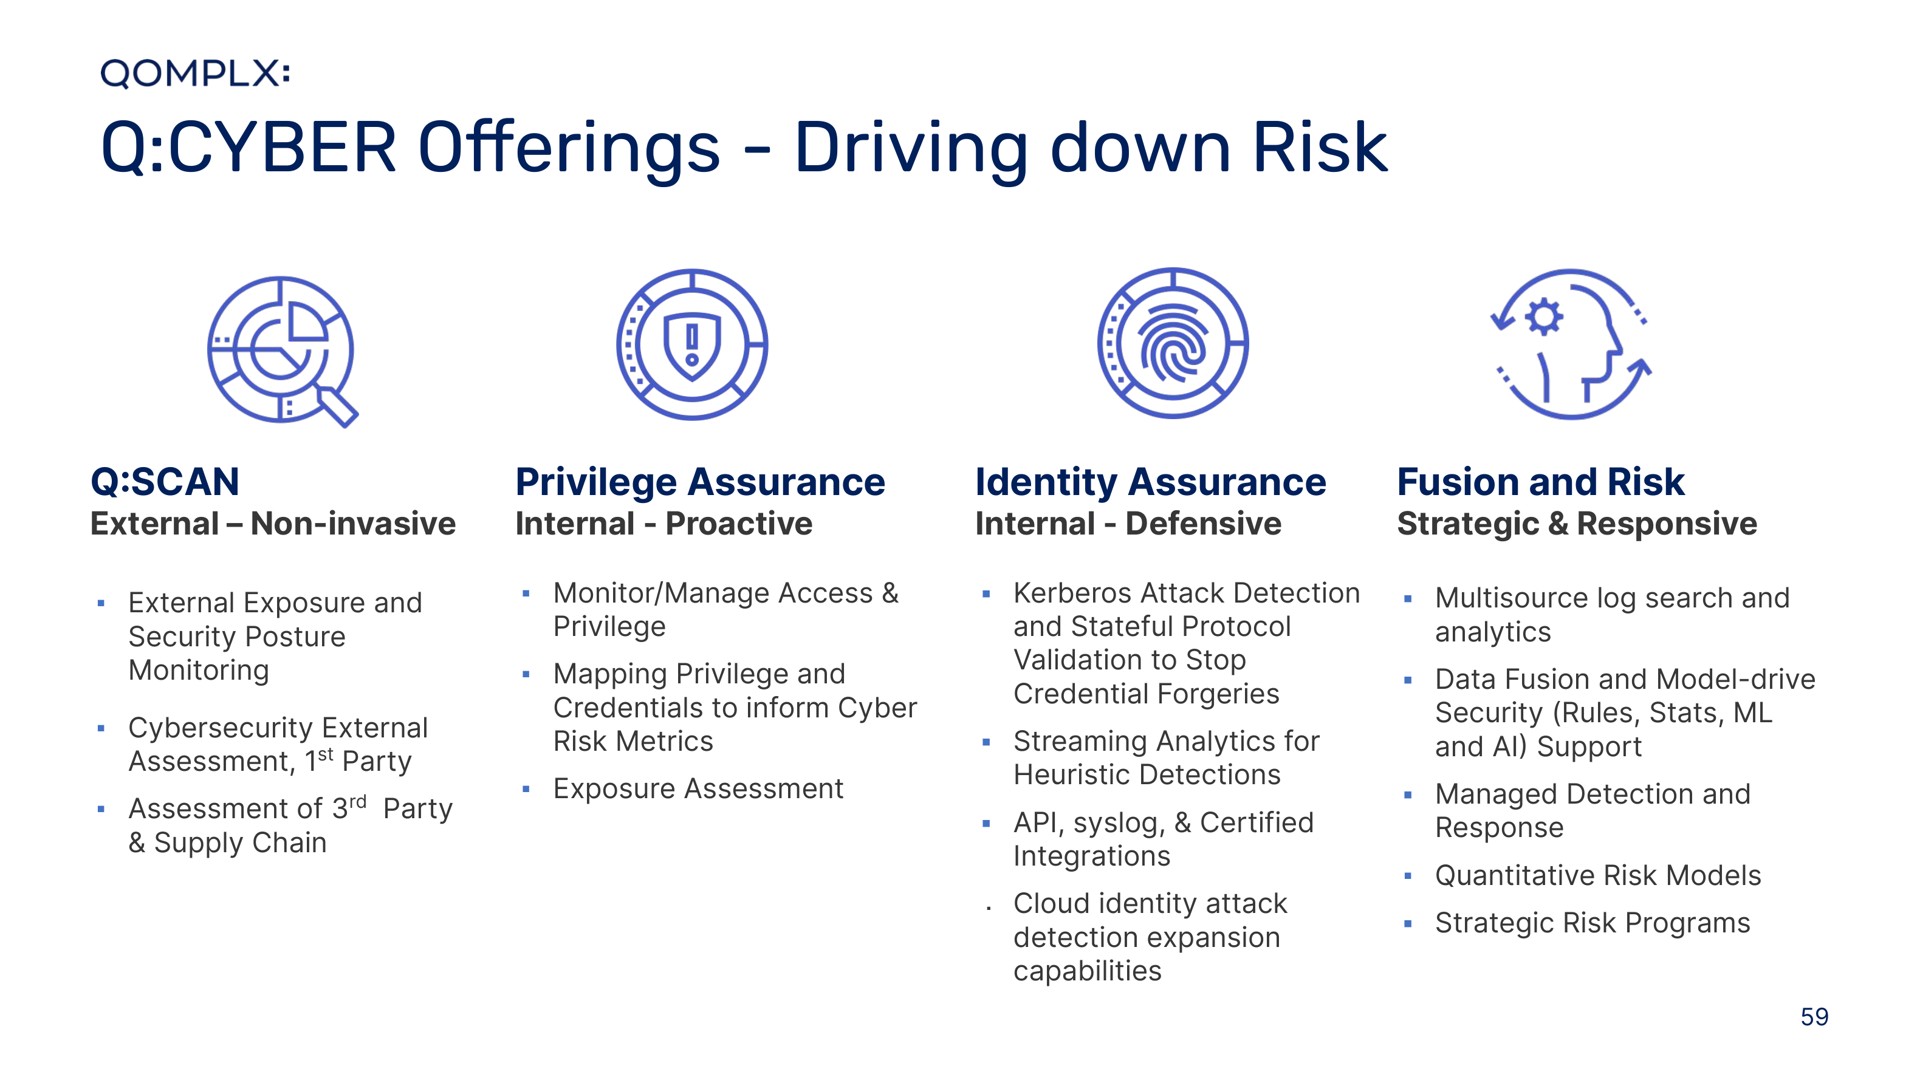 driving down risk offerings lied | Qomplx